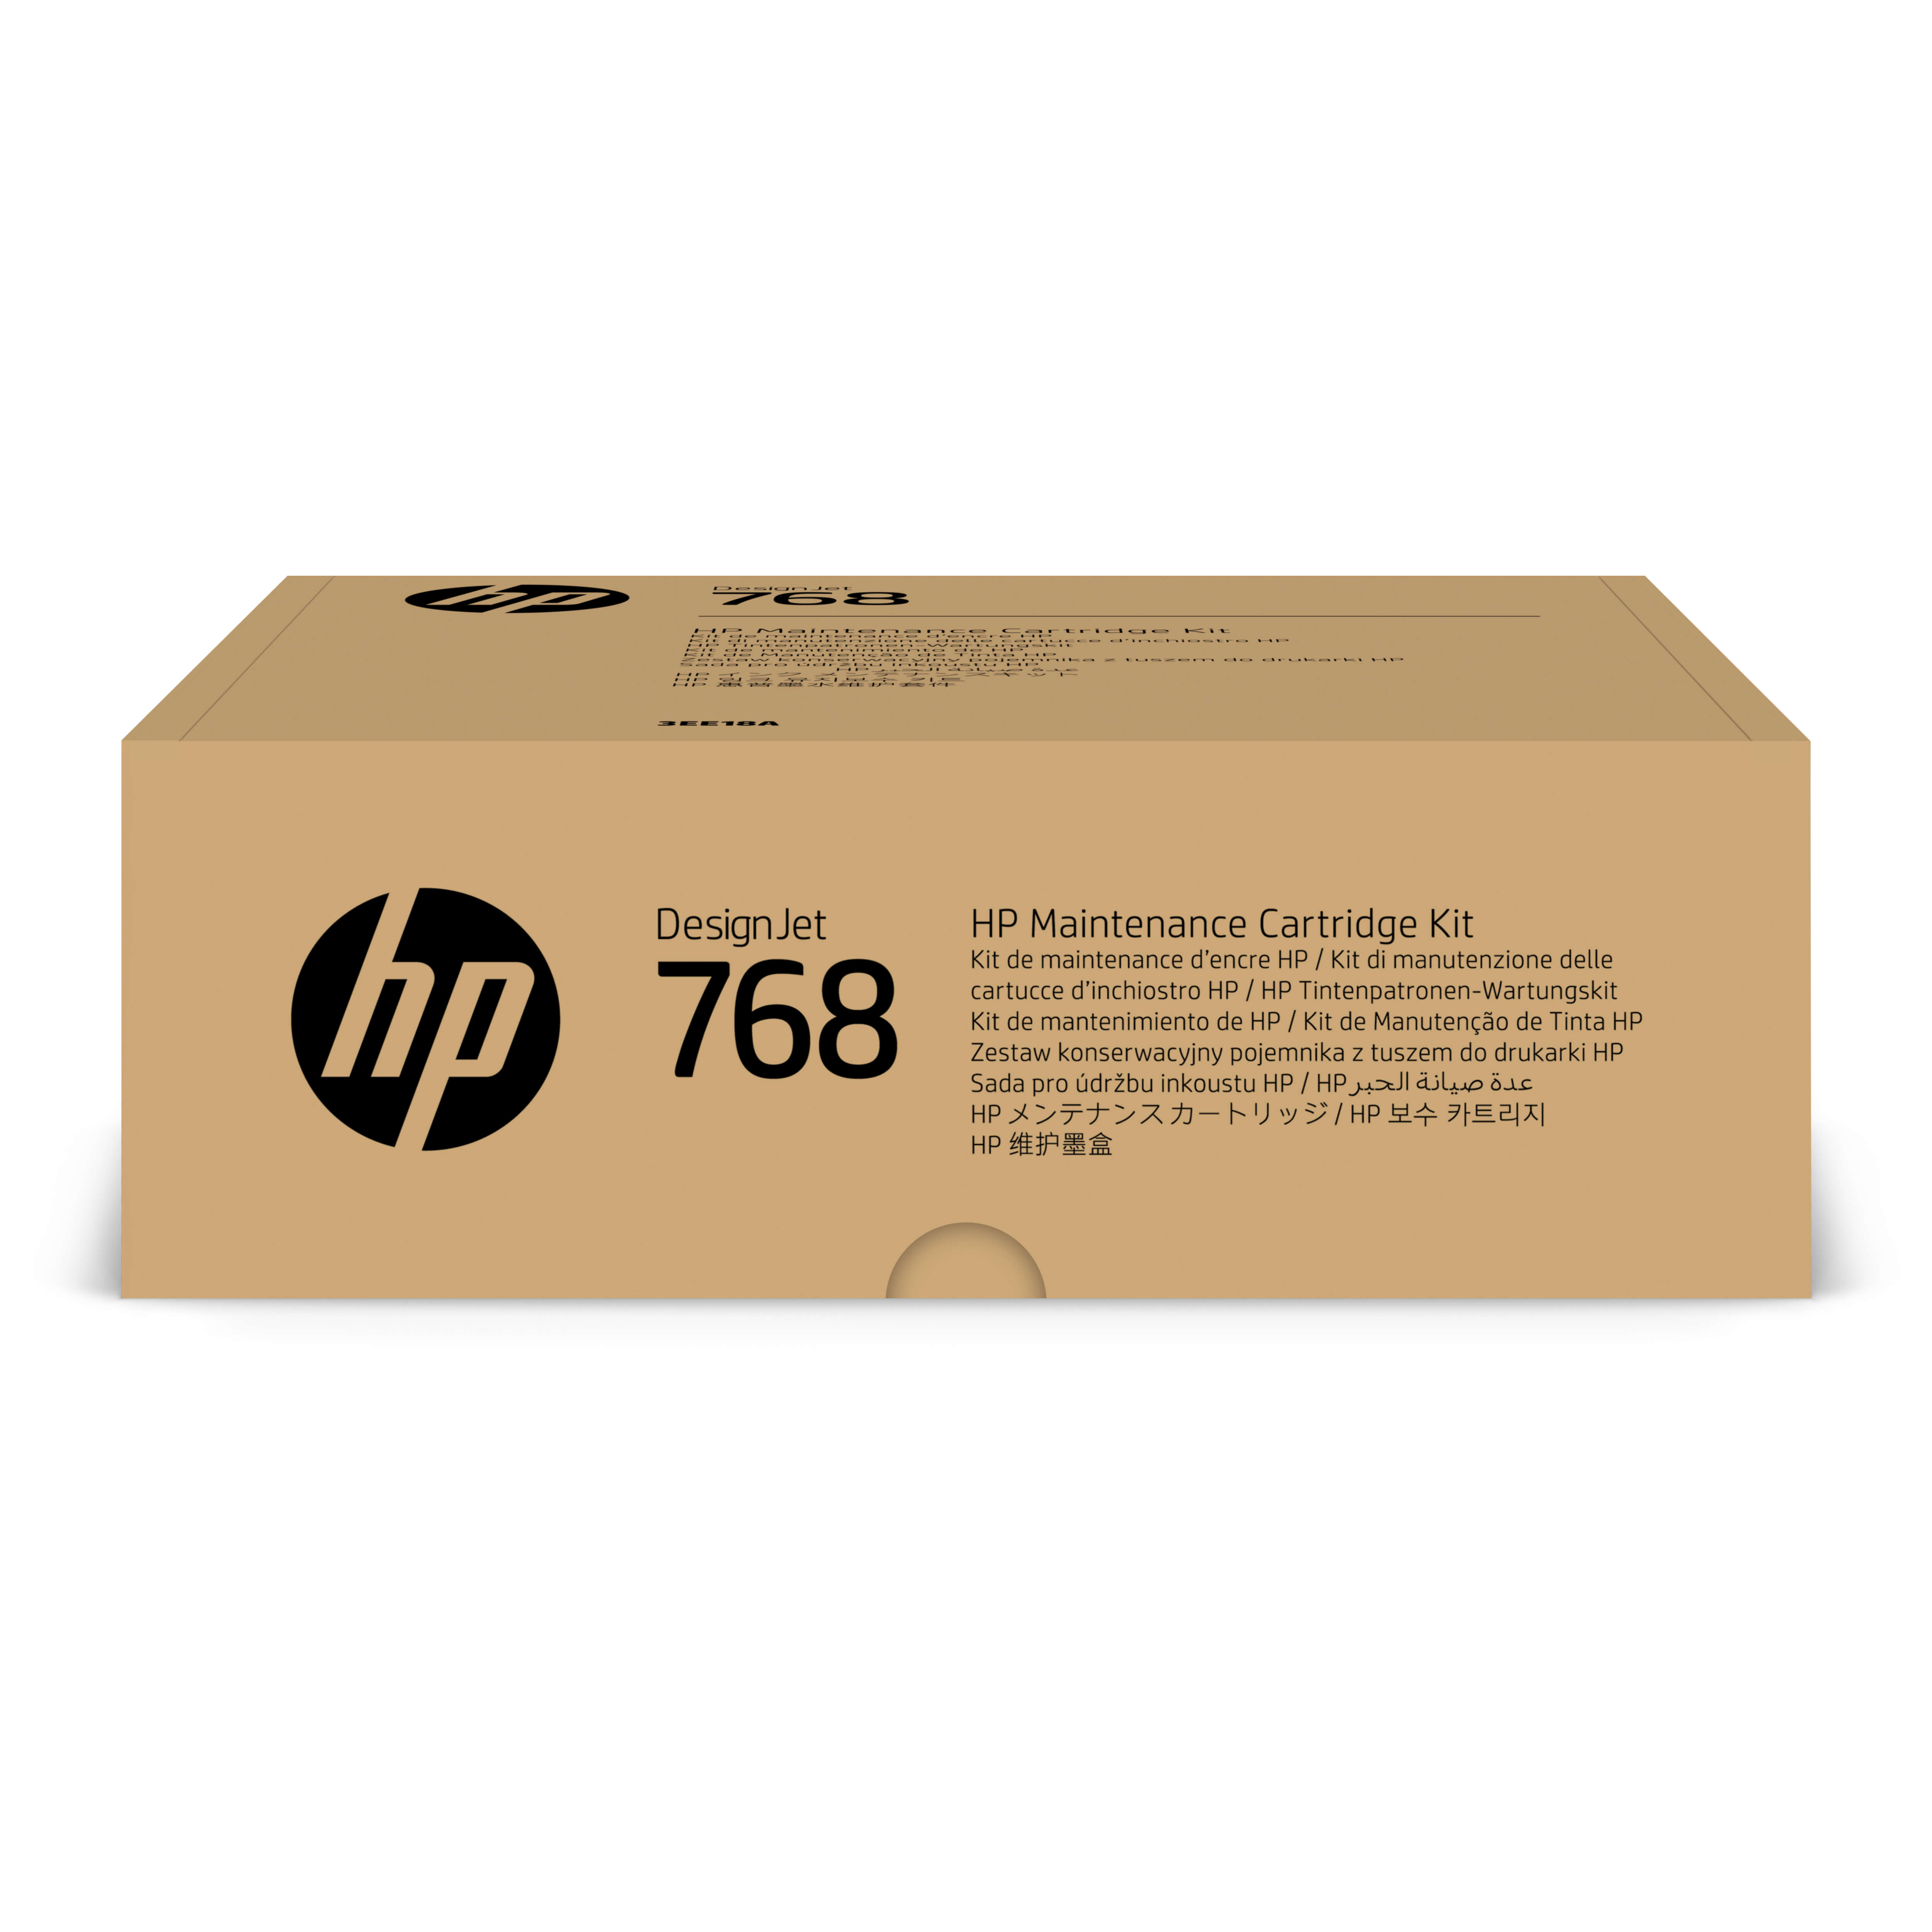 HP 768 DesignJet Maintenance Cartridge